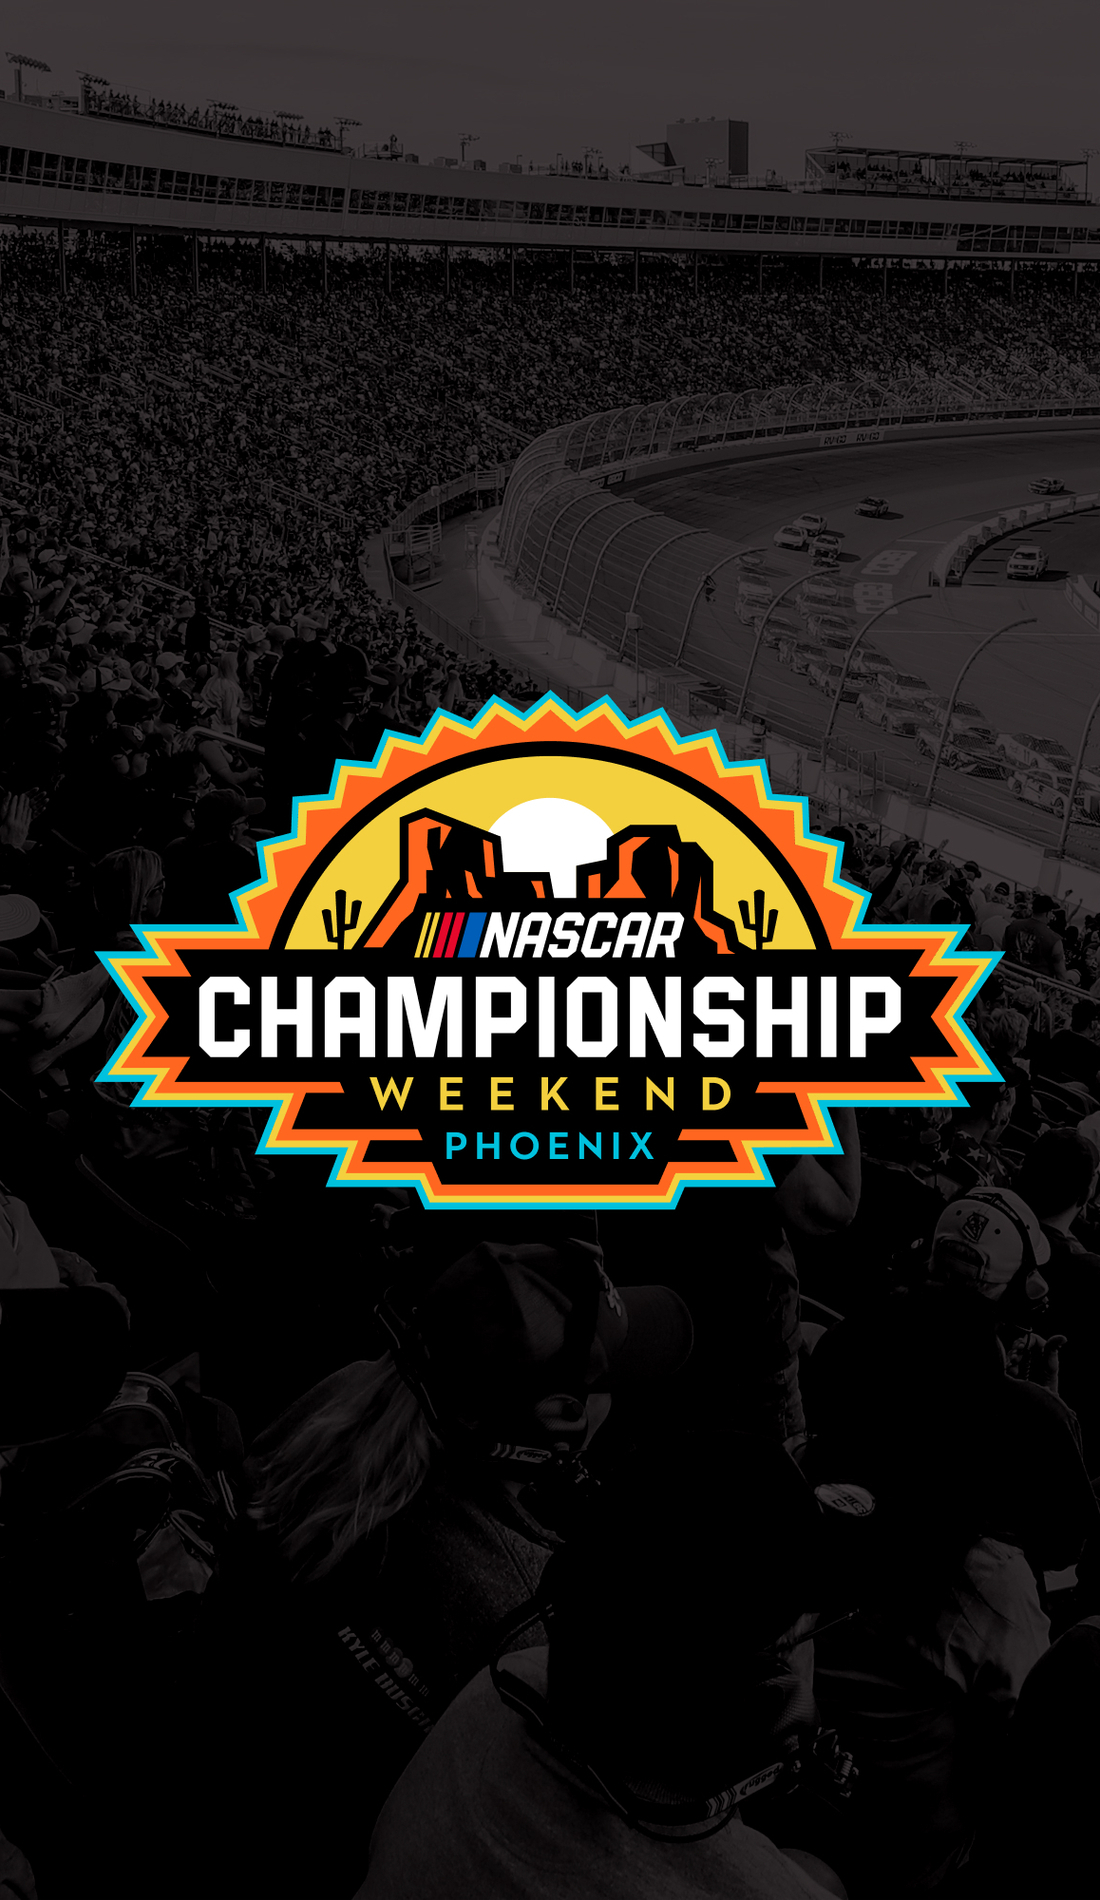 A NASCAR Championship Weekend live event